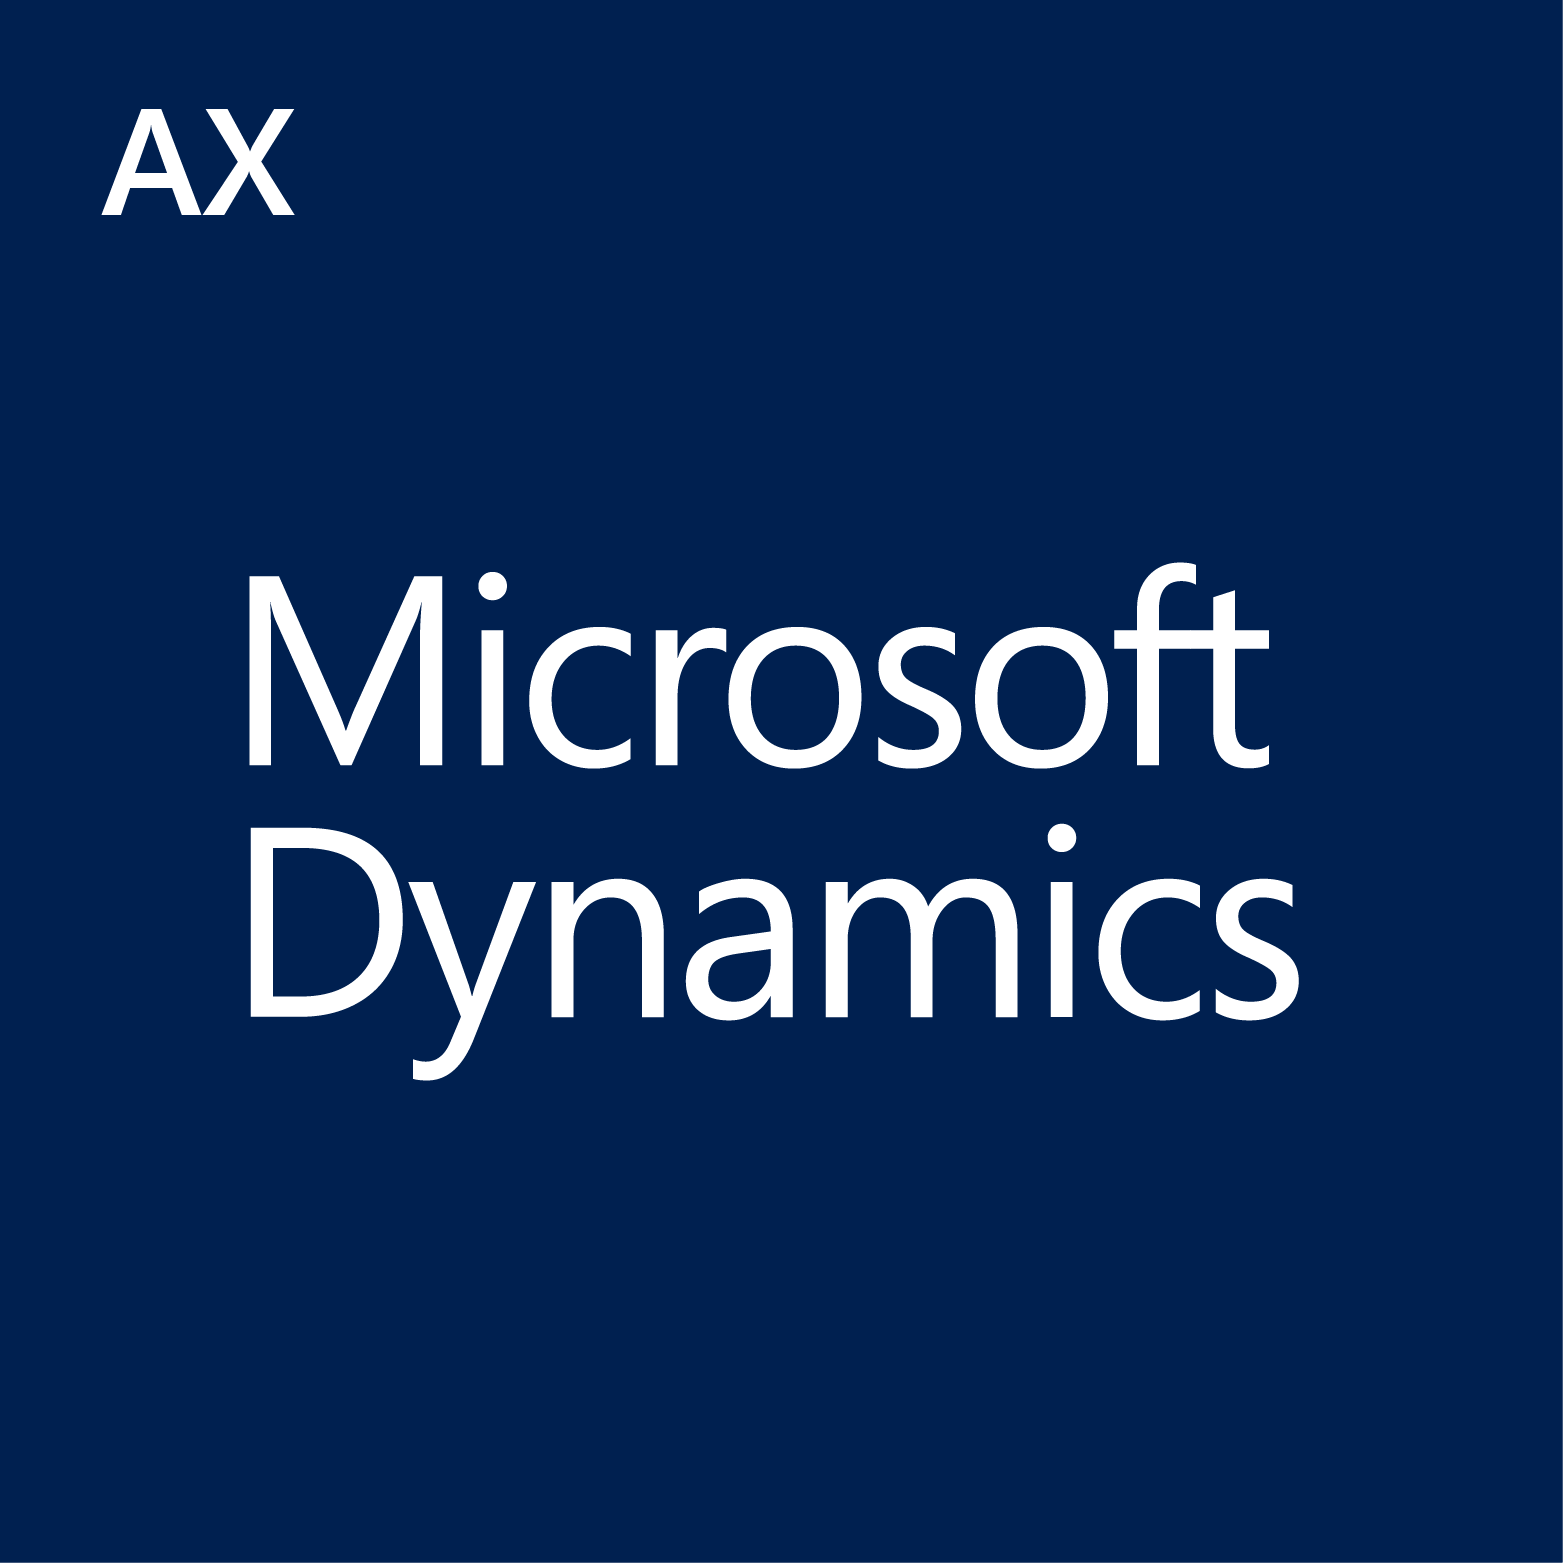 New Microsoft Dynamics Logo - New Microsoft Dynamics Logo | Encore Business Solutions